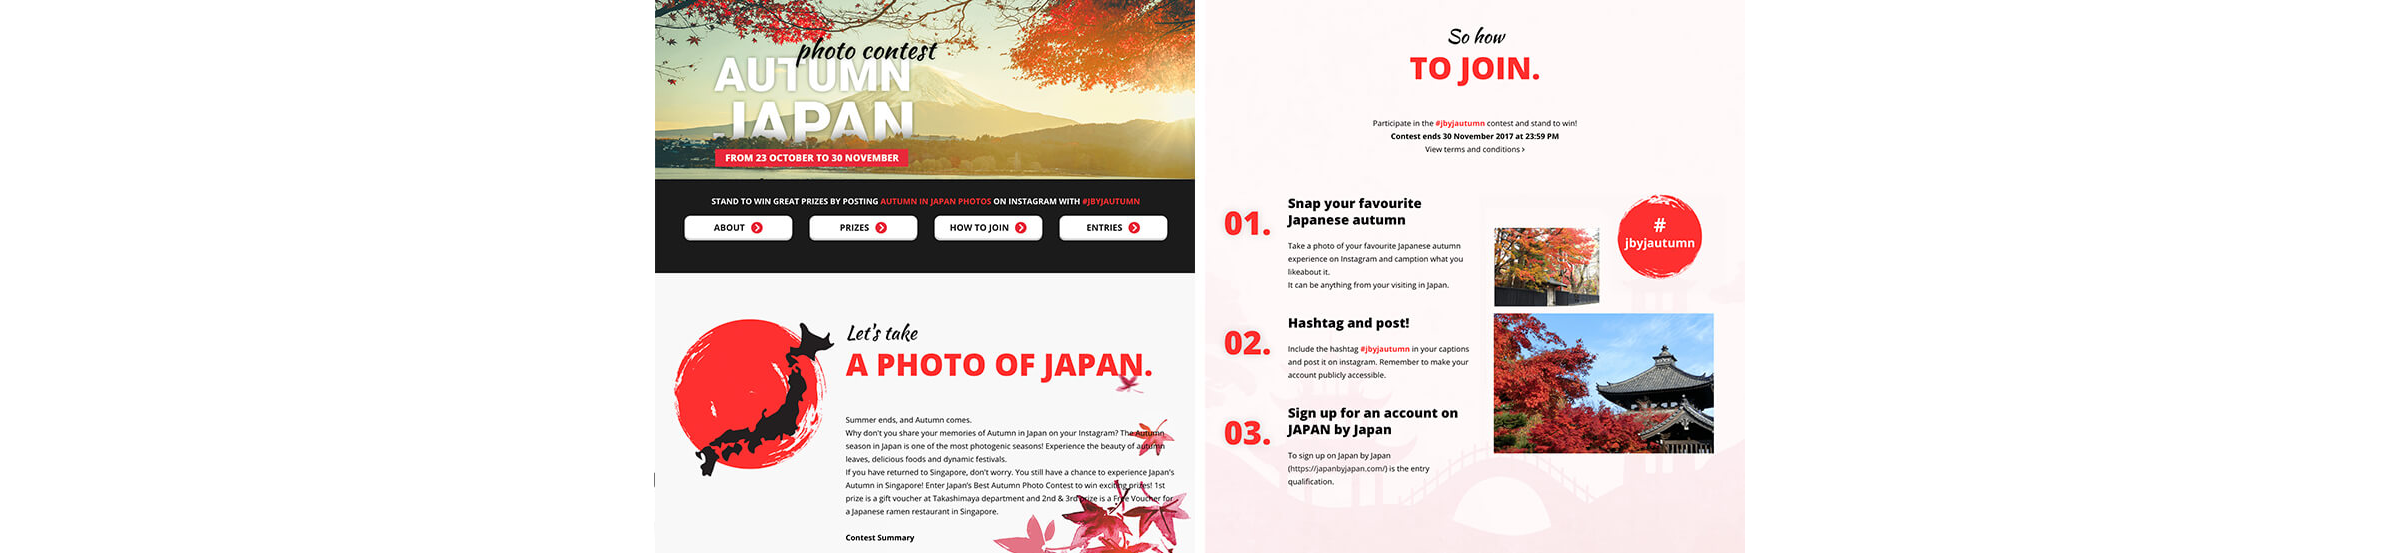 JNTO Japan by Japan | 秋特設サイト